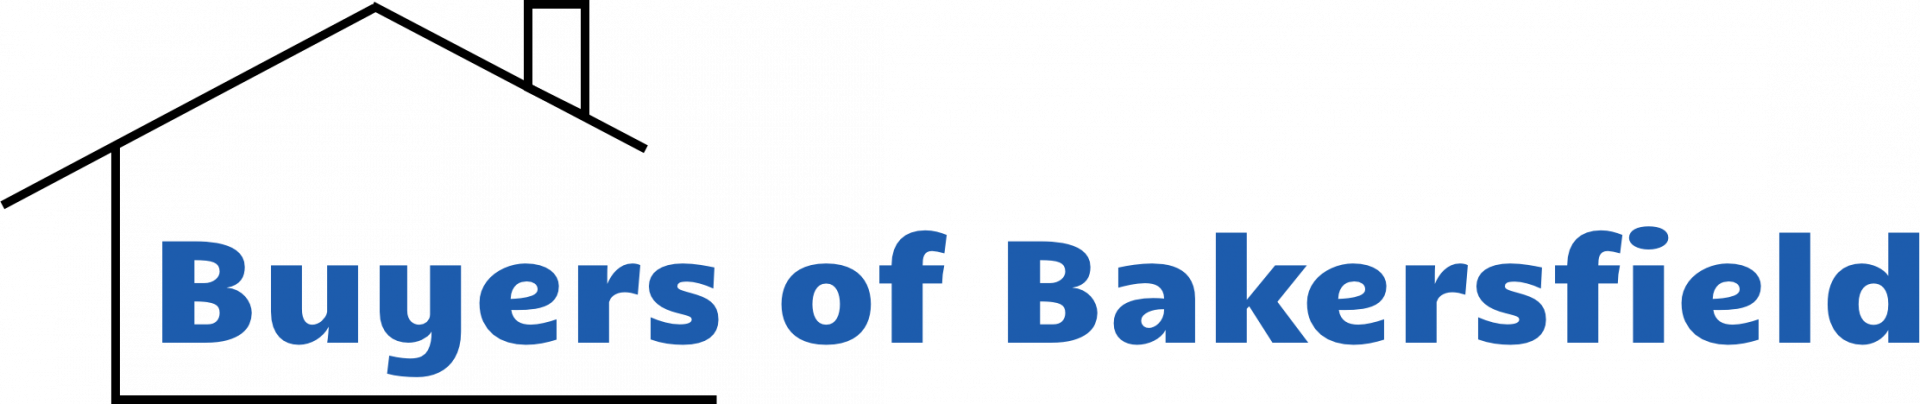 Buyers of Bakersfield  logo